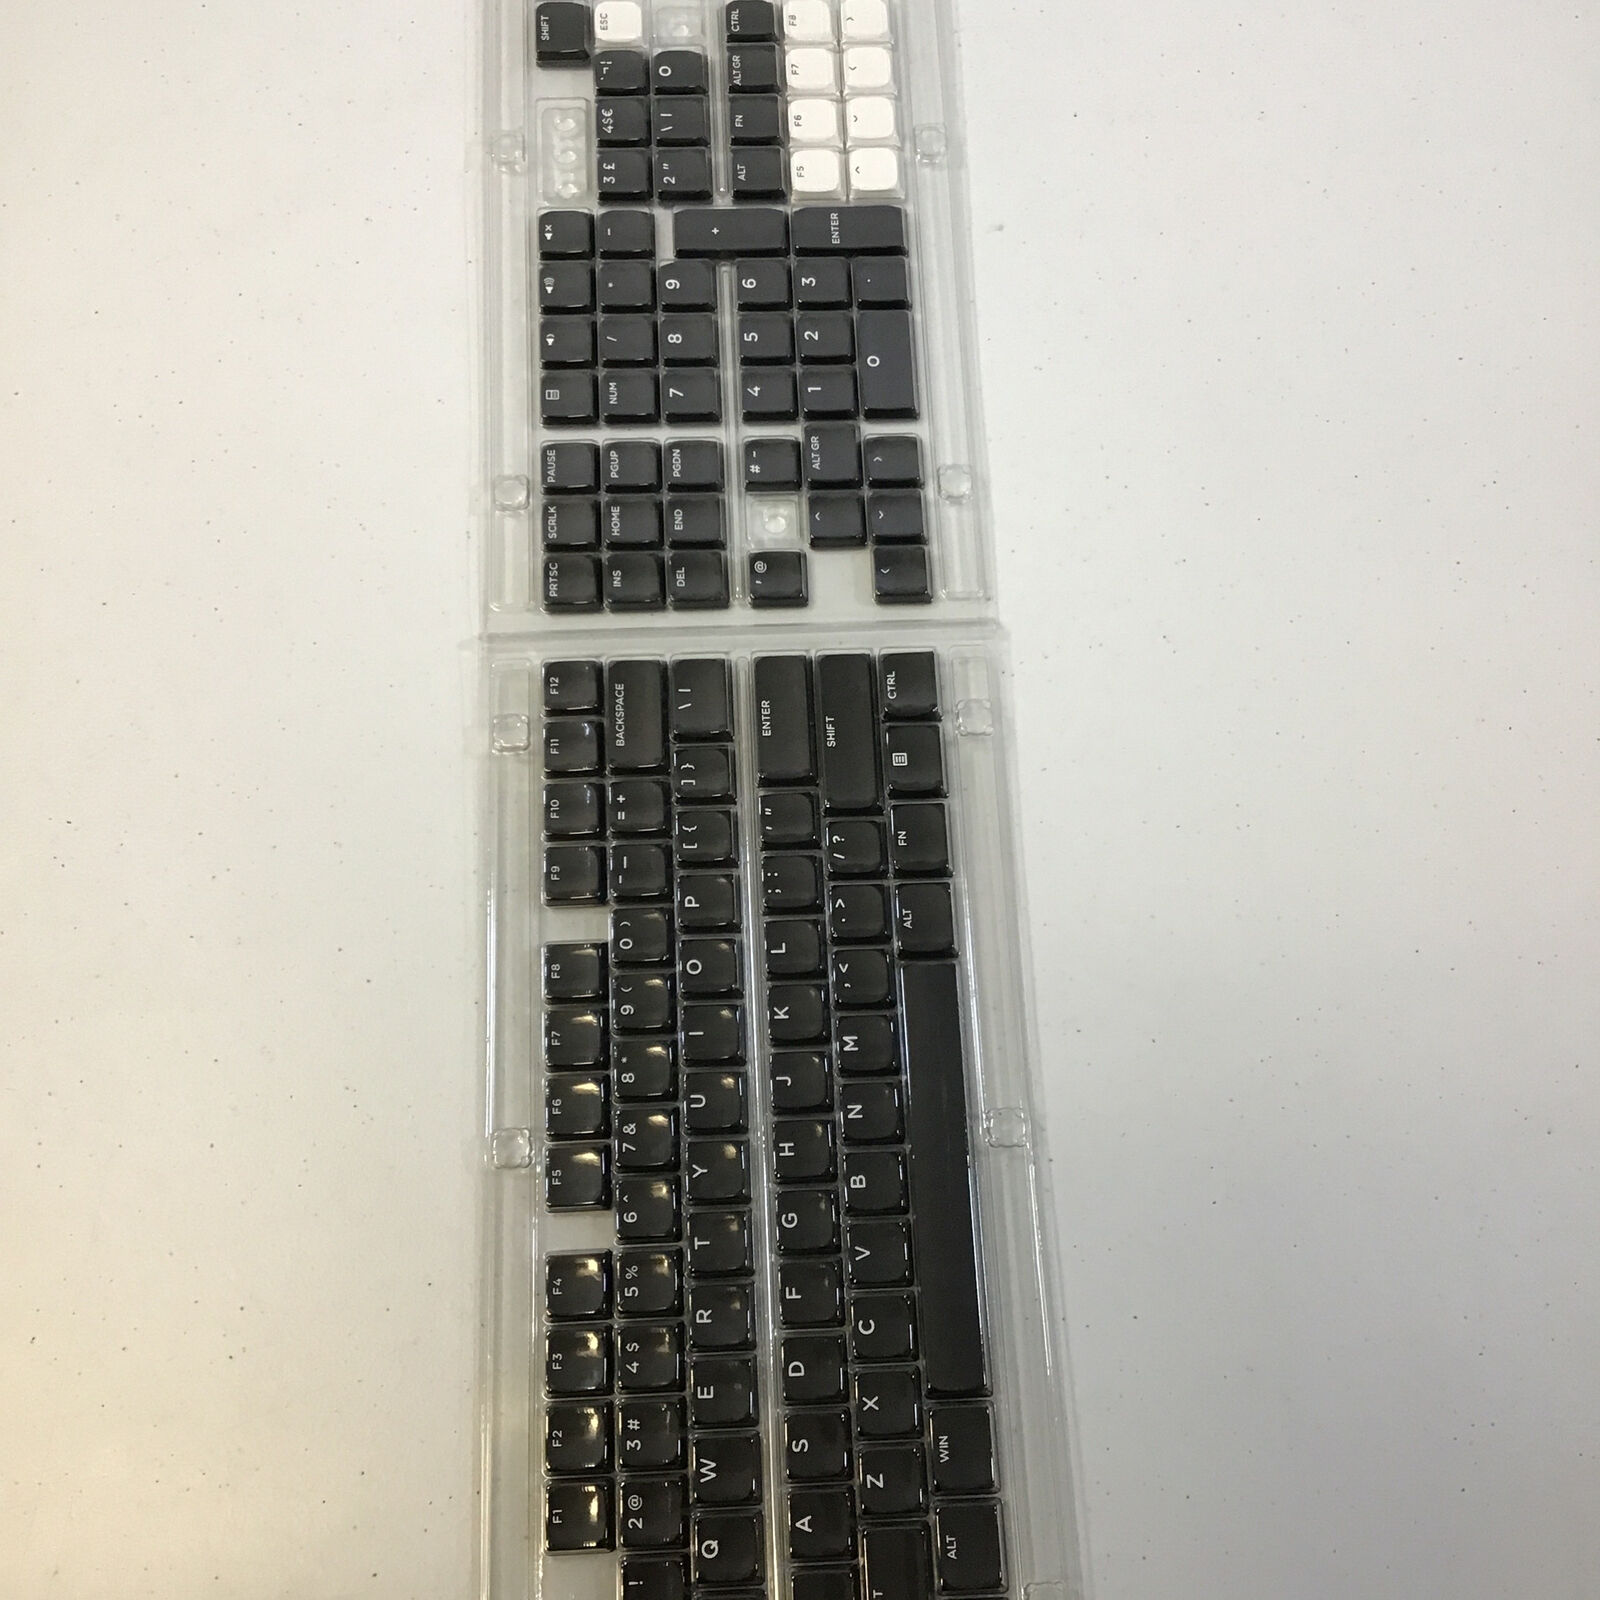 XVX Black 75 Percent PBT Custom Low Profile Keyboard Keycaps